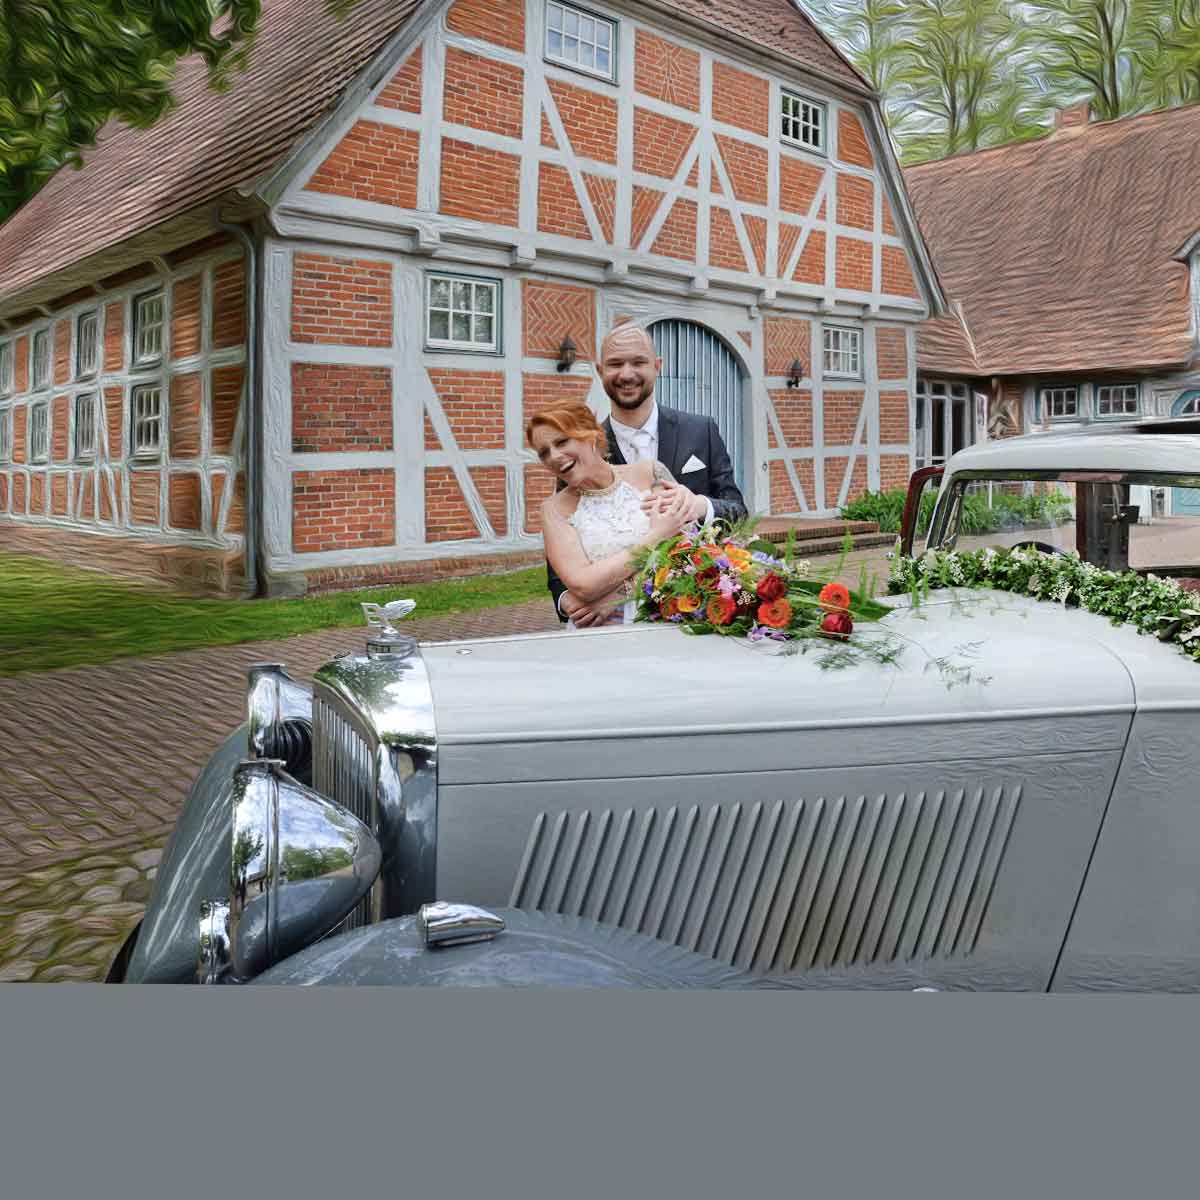 Fotolocation zur Hochzeit Gut Sandbeck